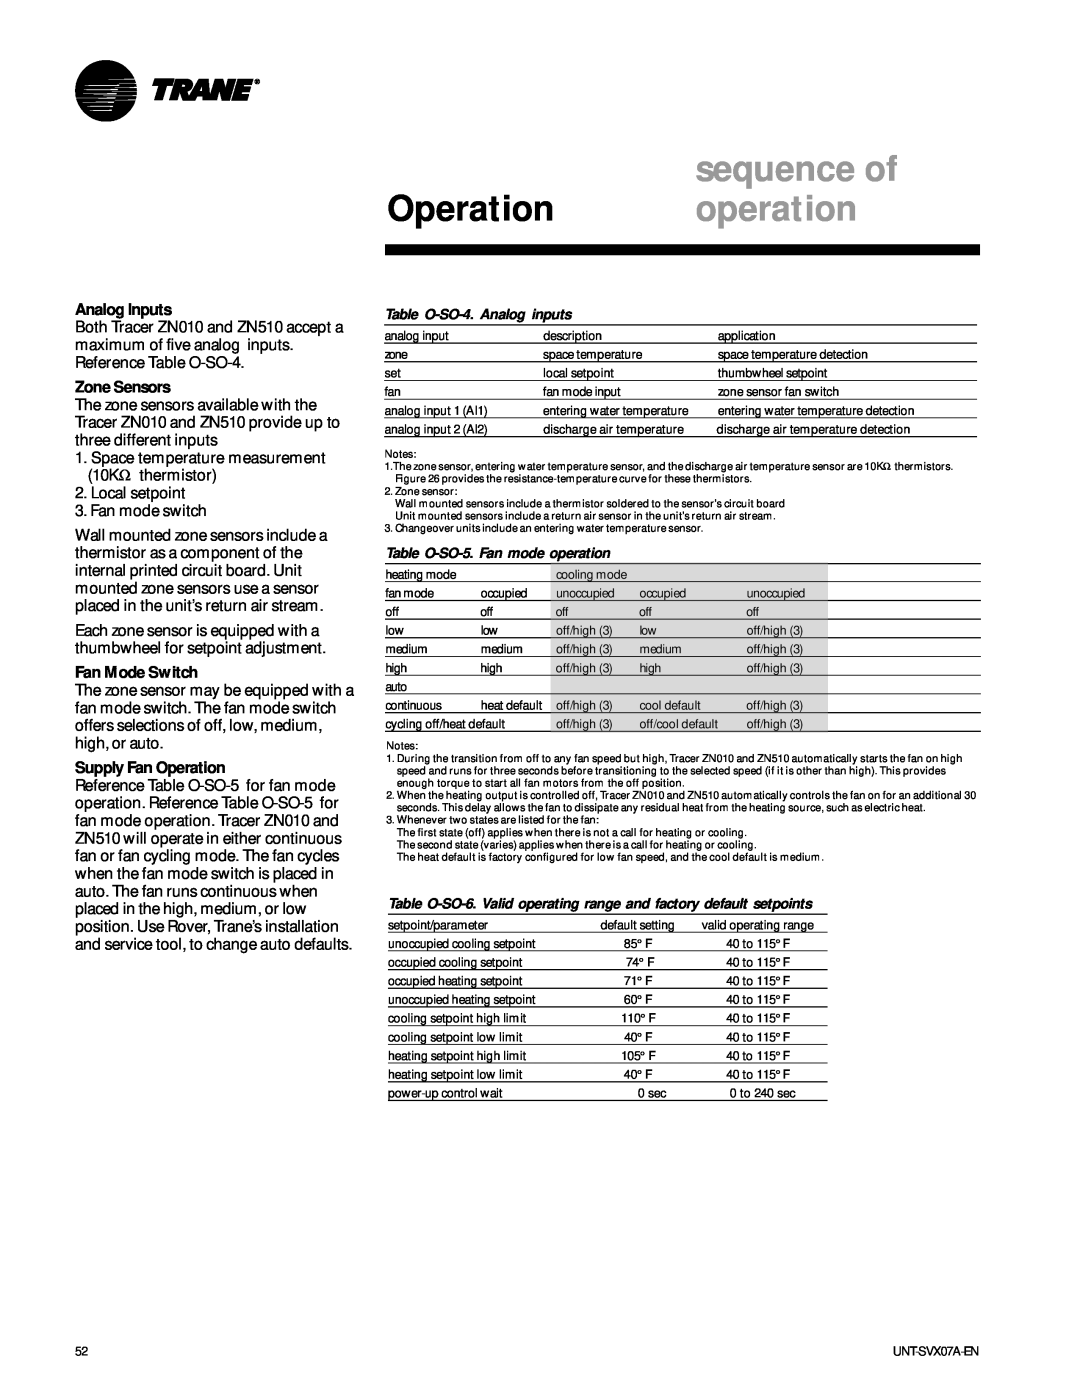 Trane UNT-SVX07A-EN sequence of, Operation operation, Analog Inputs, Zone Sensors, Fan Mode Switch, Supply Fan Operation 